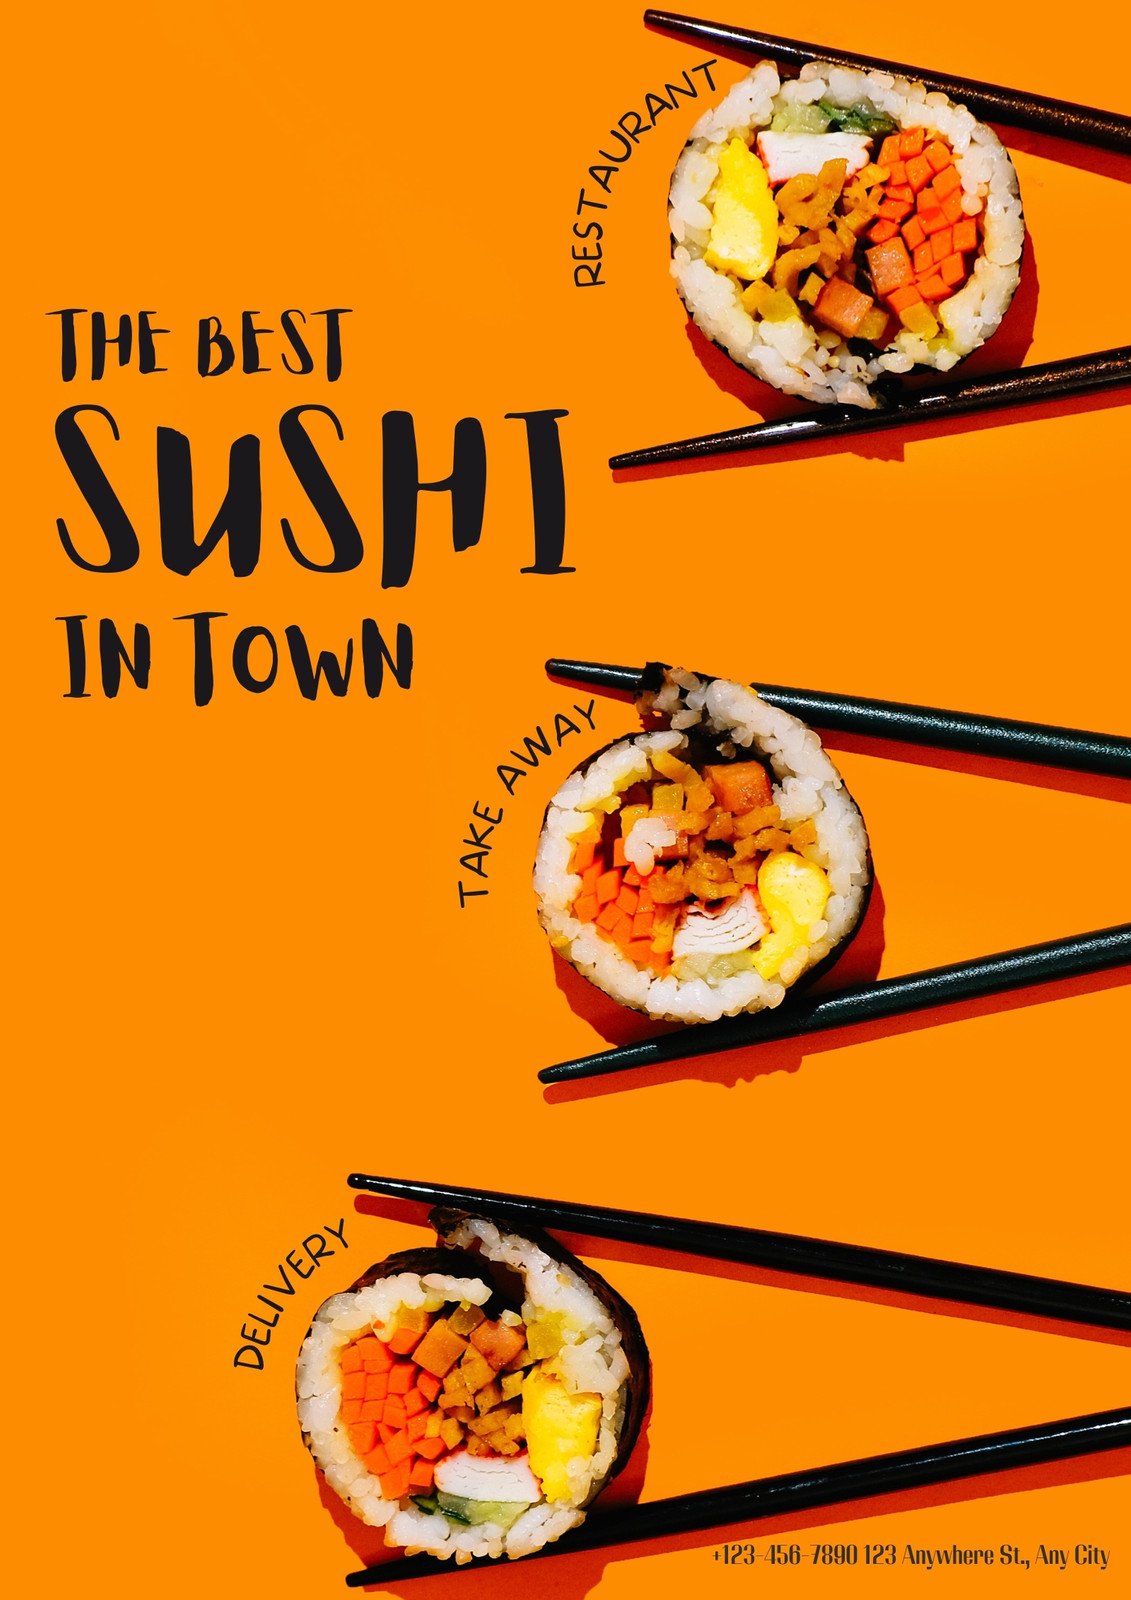 https://marketplace.canva.com/EAFEbyTP6nI/4/0/1131w/canva-orange-photo-sushi-restaurant-take-away-flyer-IfUtNpMuq34.jpg